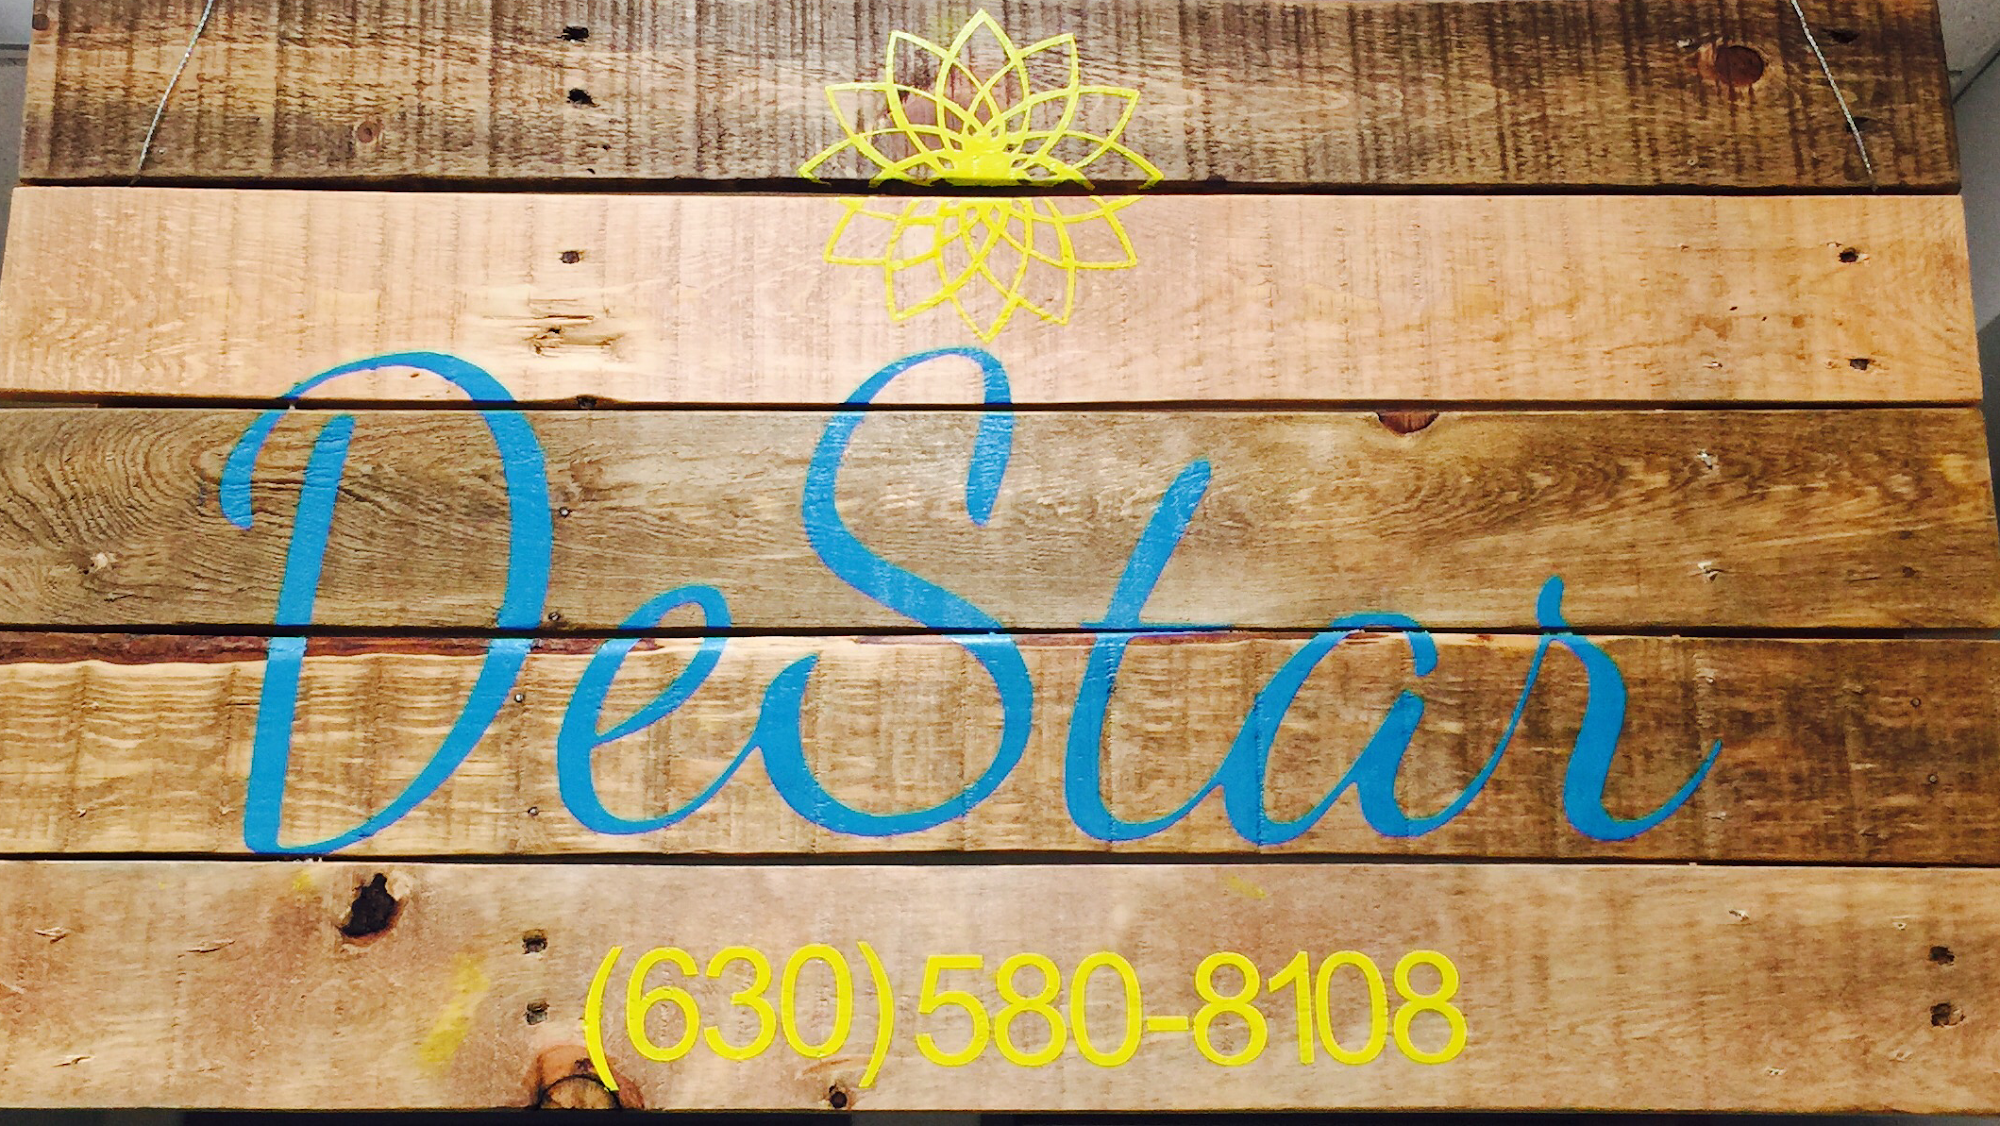 DeStar Salon, LLC